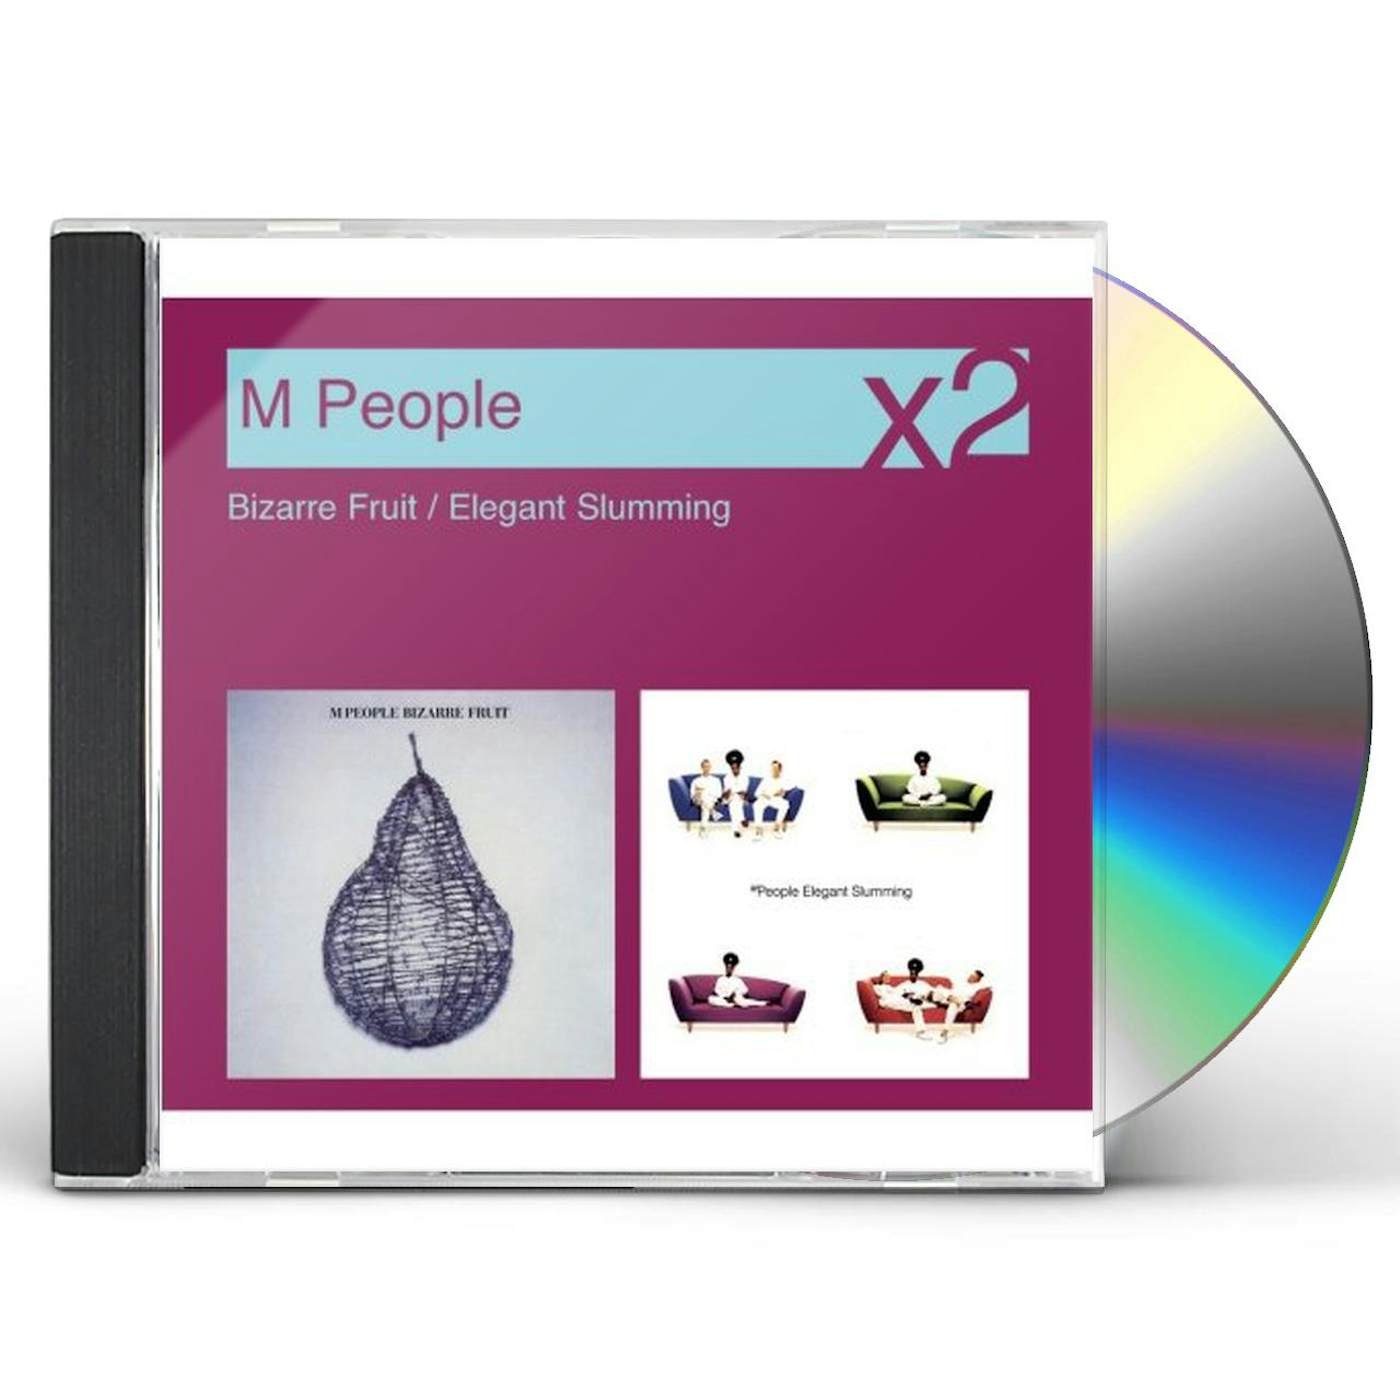 M People BIZARRE FRUIT / ELEGANT SLUMMING CD